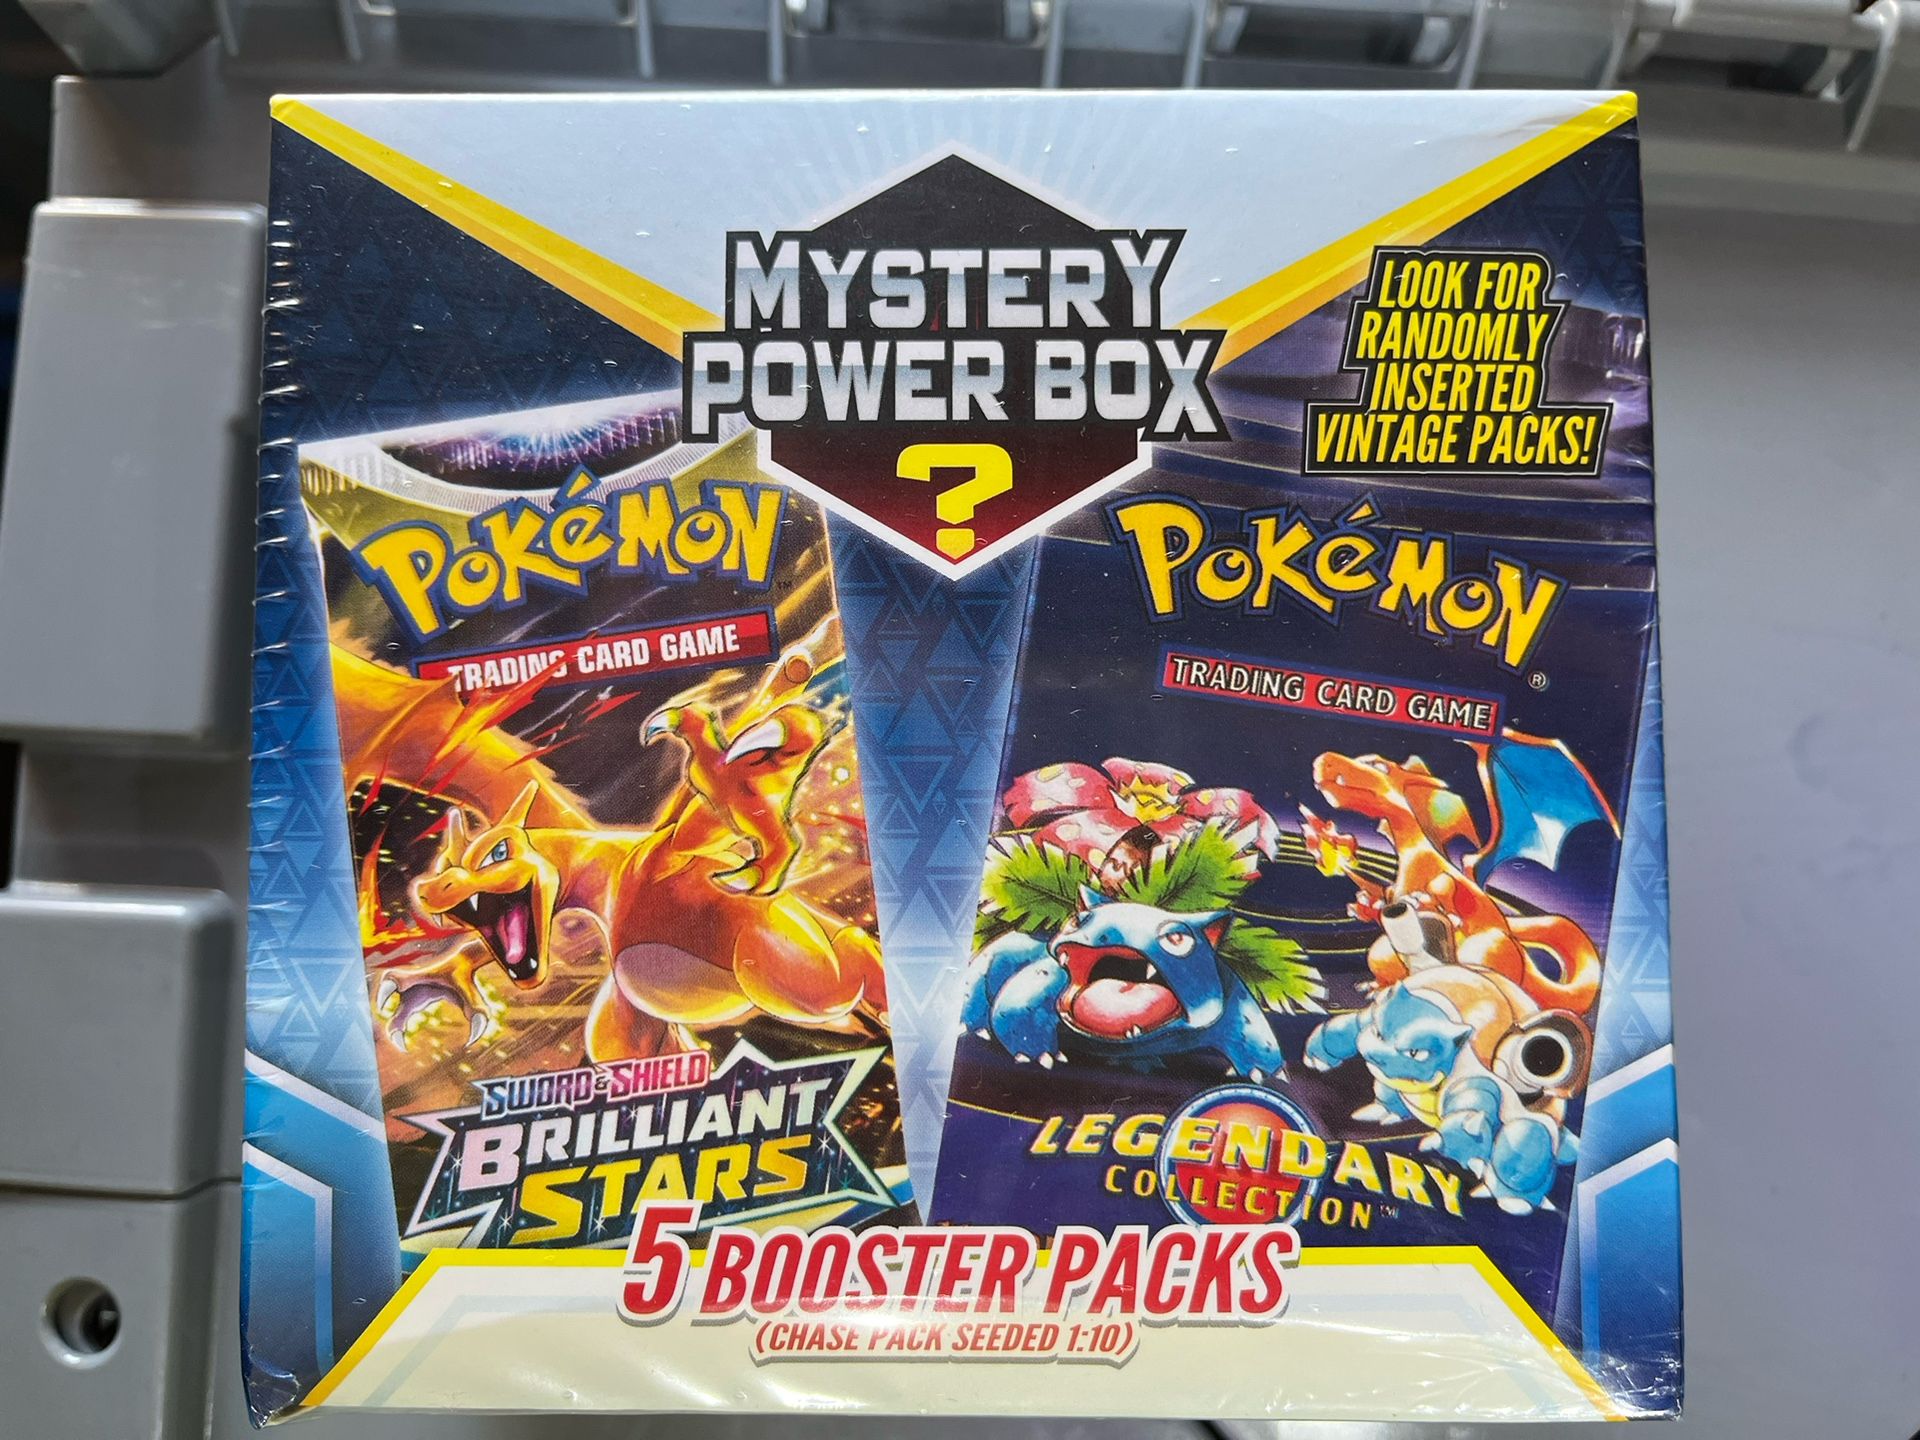 Pokemon Mystery Box